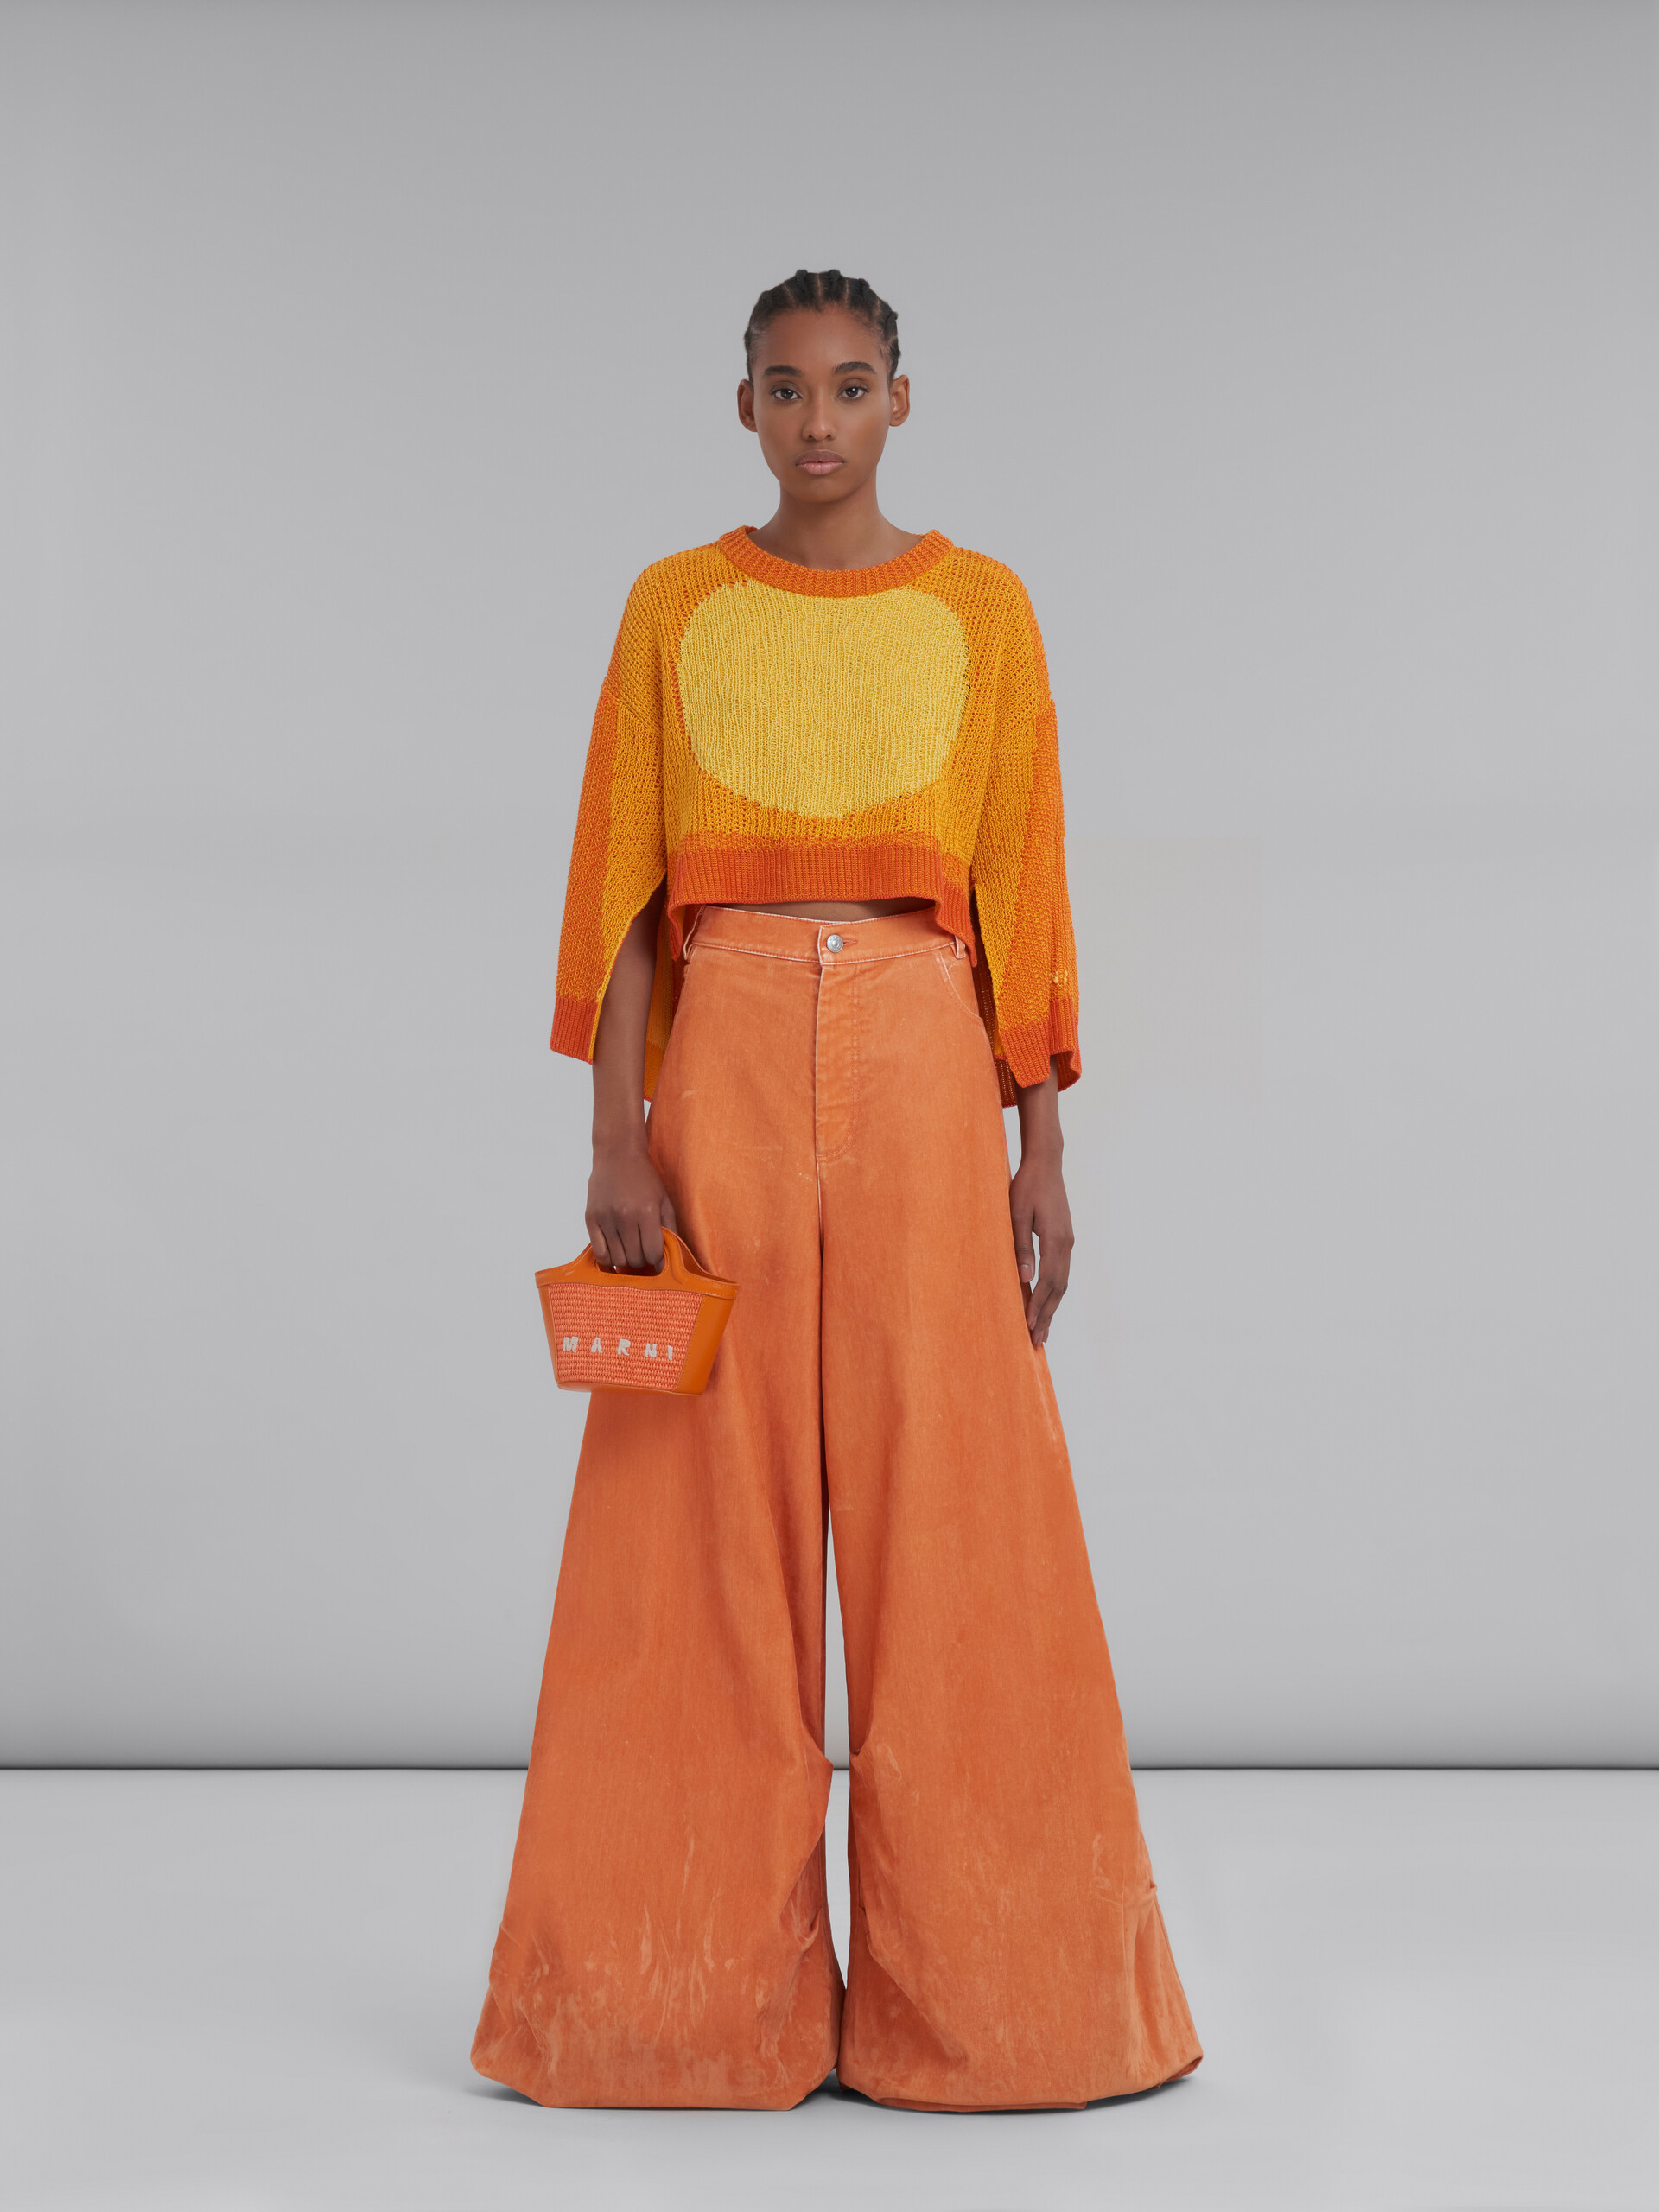 Tropicalia Micro Bag in orange leather and raffia - Handbags - Image 2